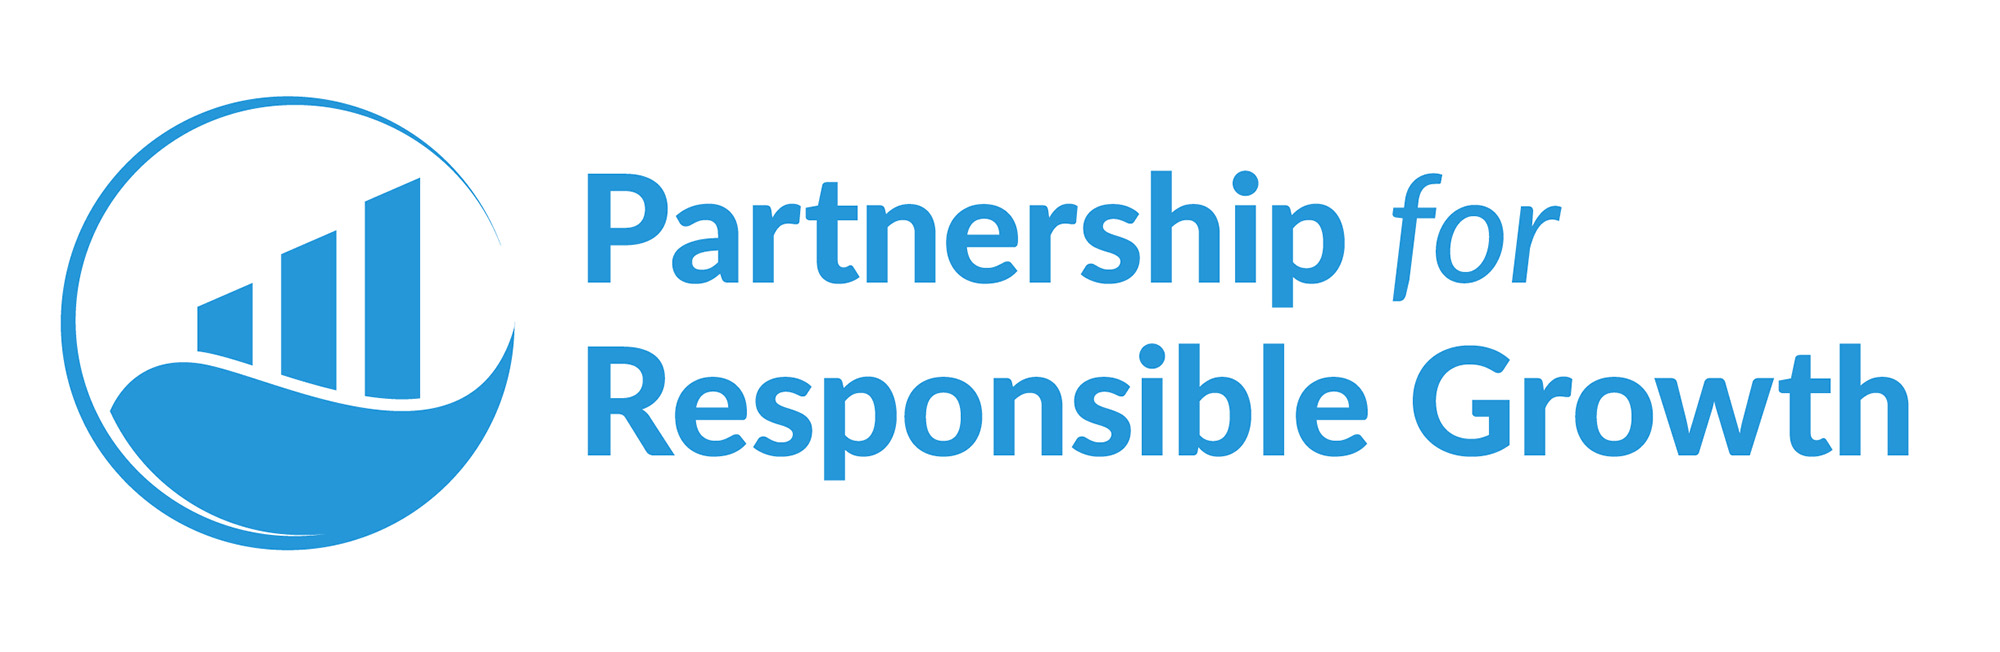 partnershipforresponsiblegrowth.org logo